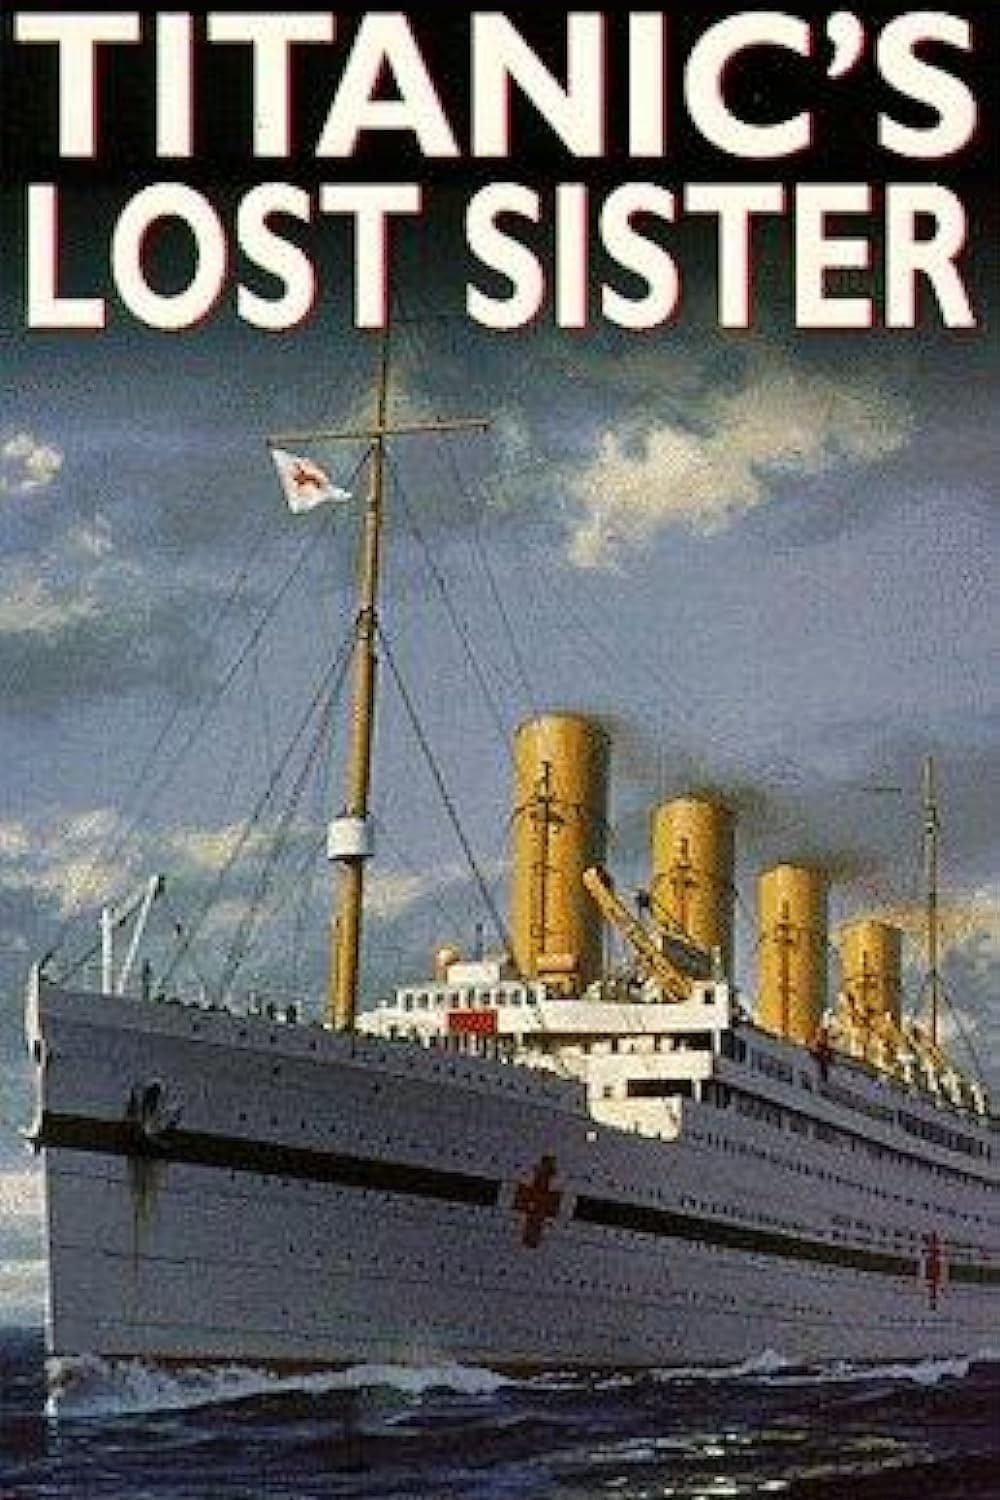 The Titanic's Lost Sister